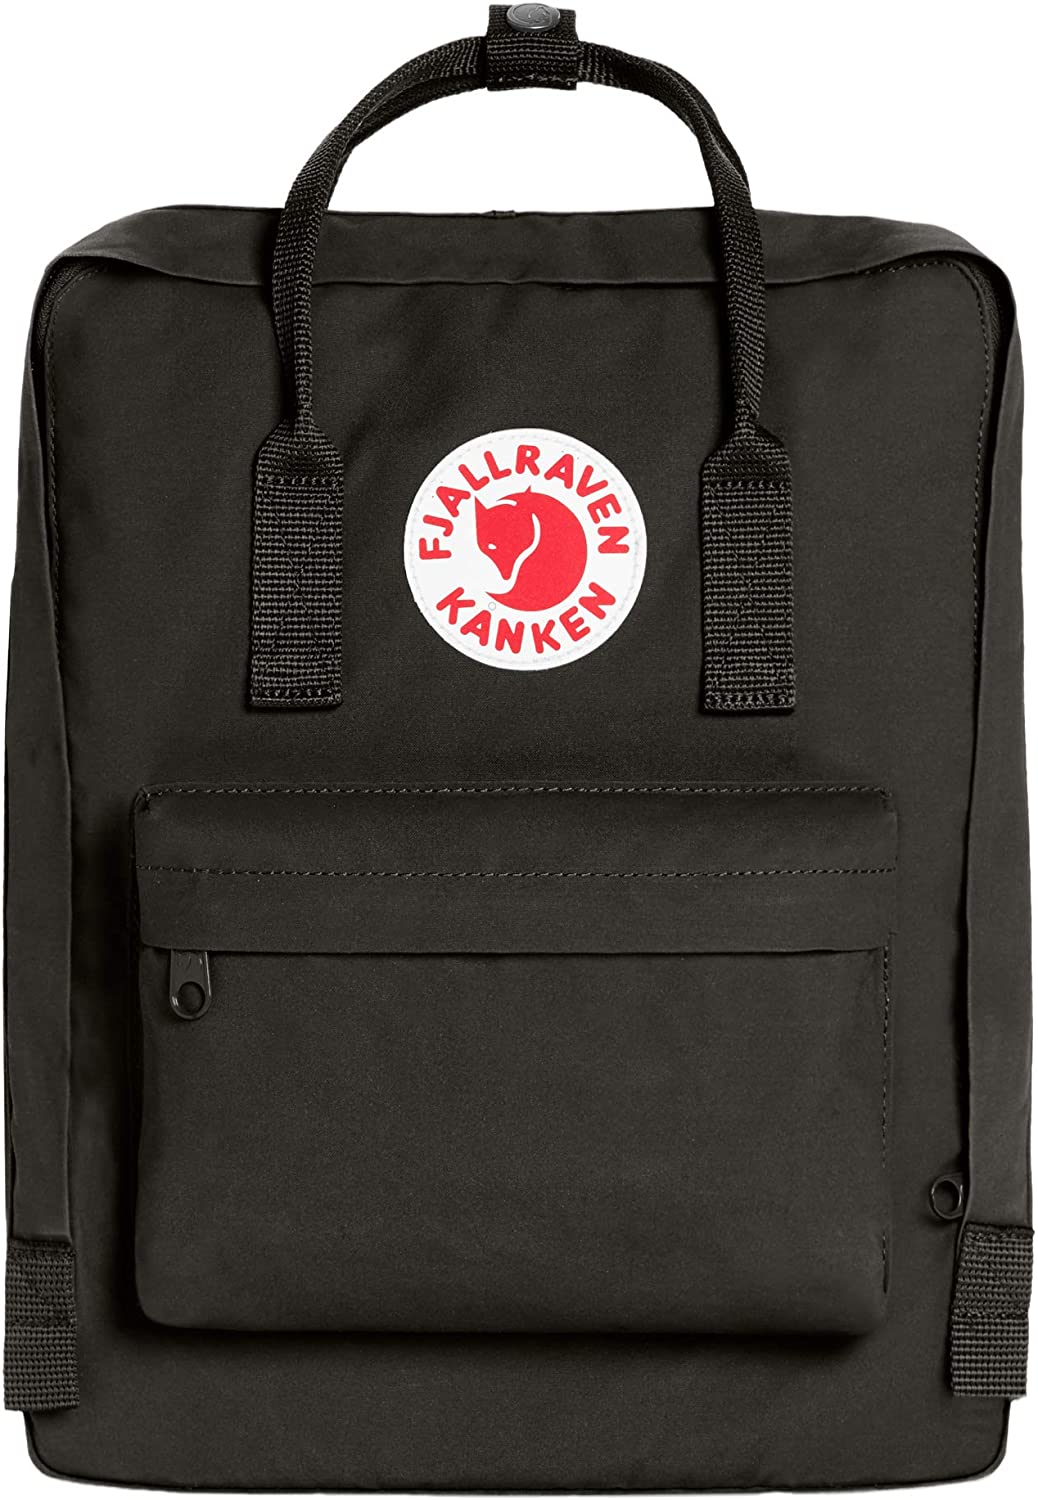 Fjallraven, Kanken Classic Backpack for Everyday, Deep Forest